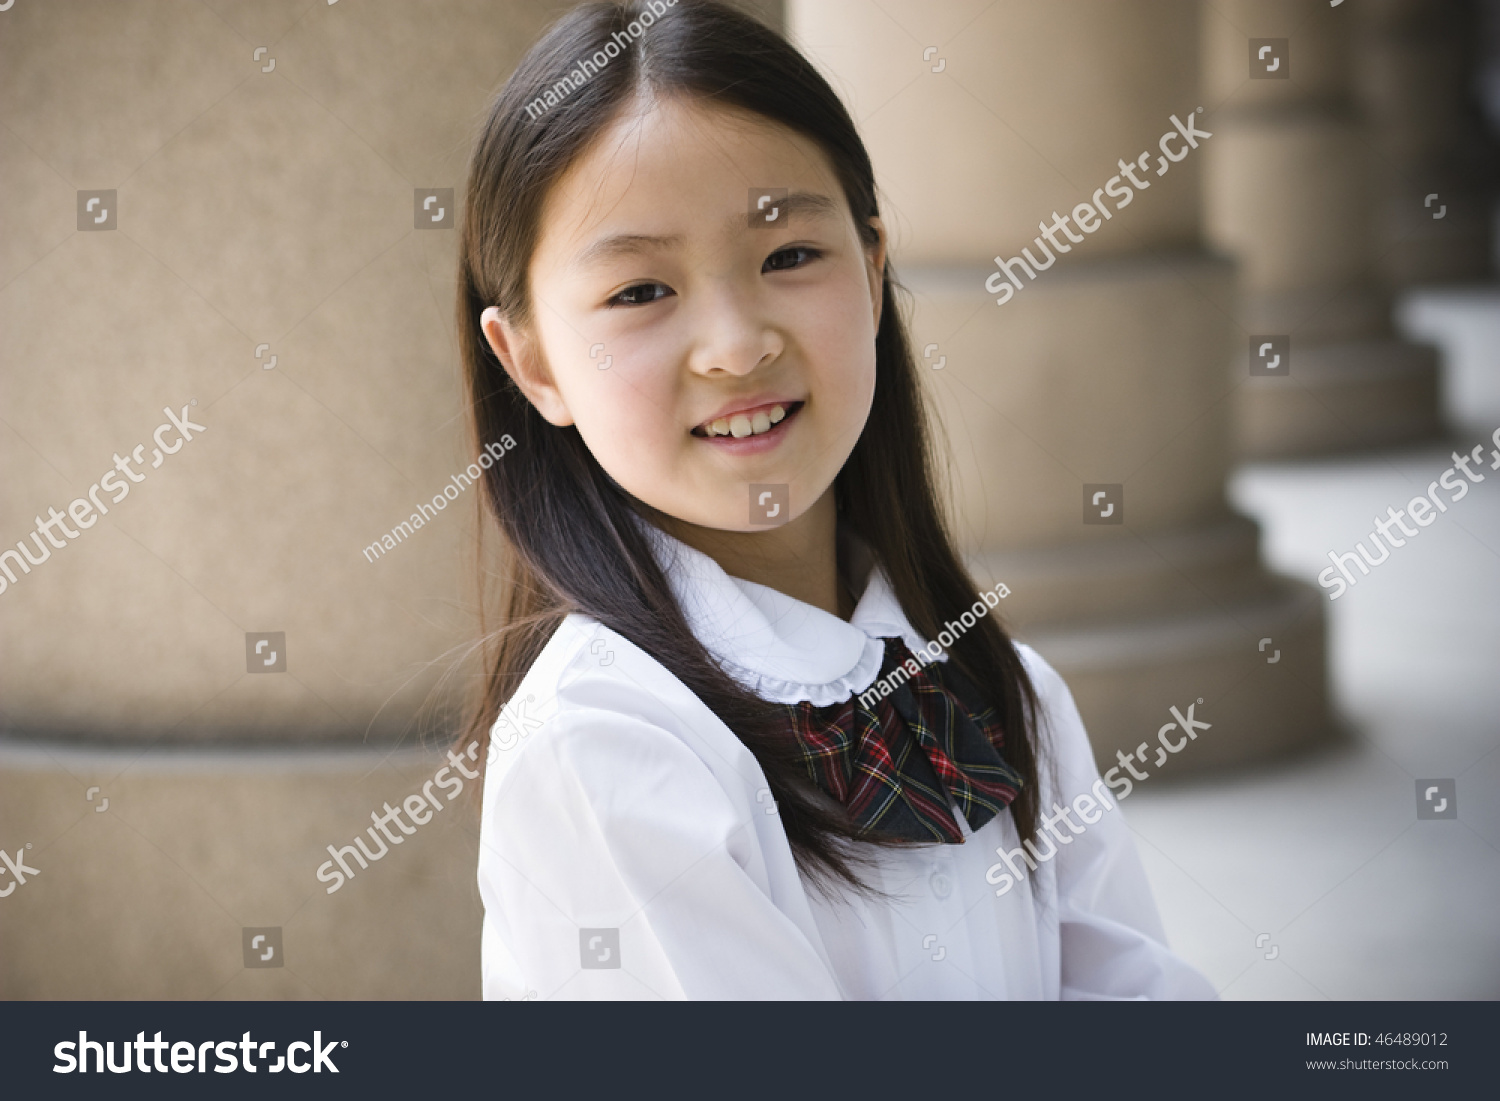 Asian School Girl Telegraph